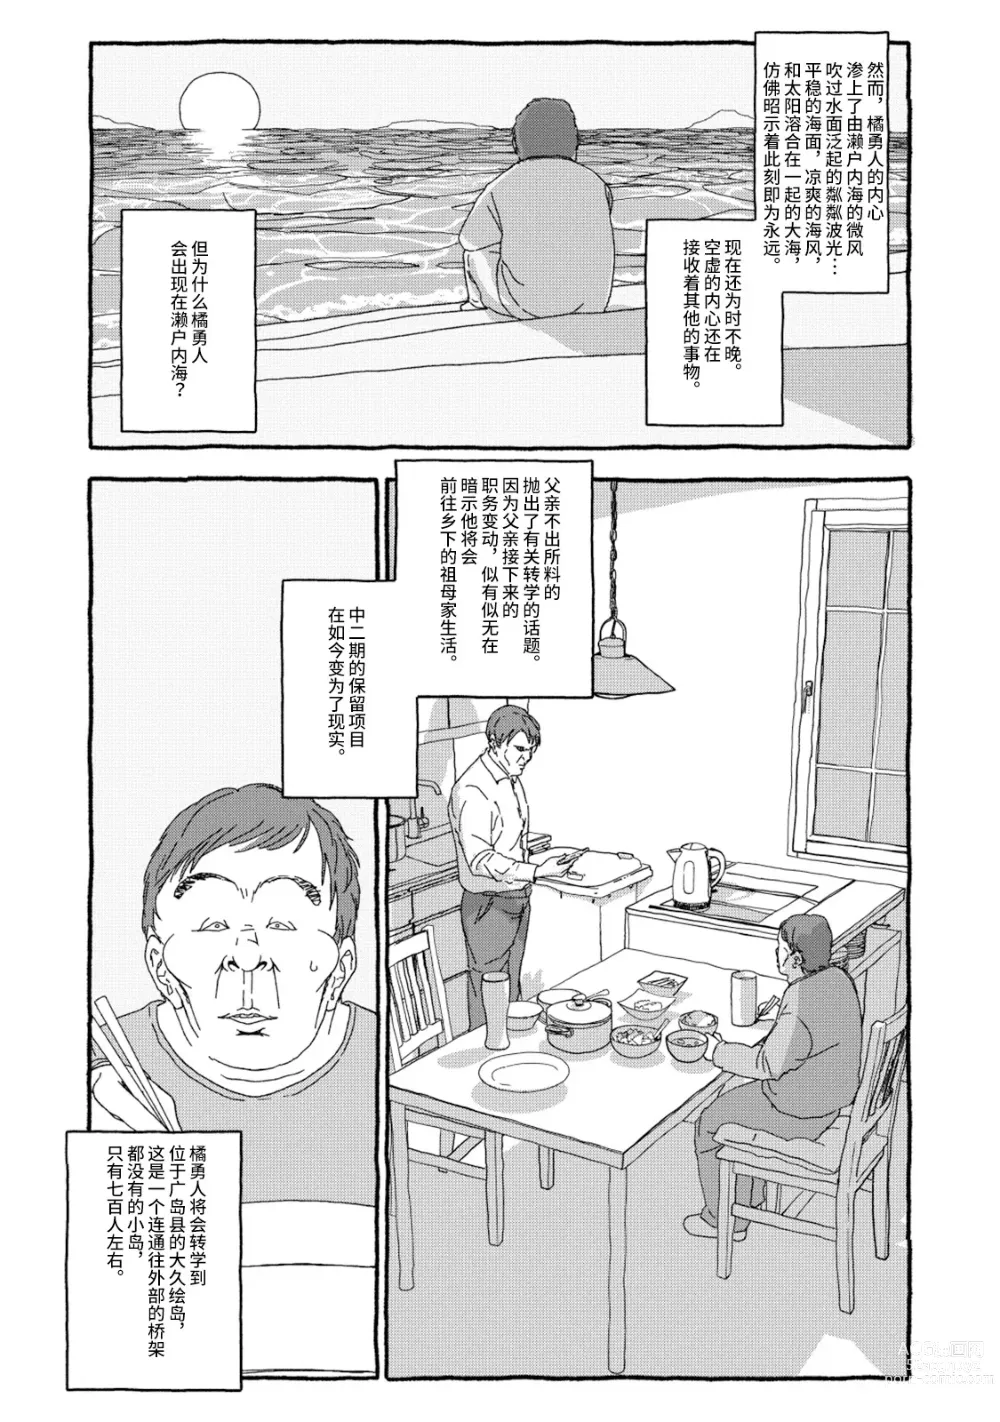 Page 15 of doujinshi 相遇四光年后合体 前篇